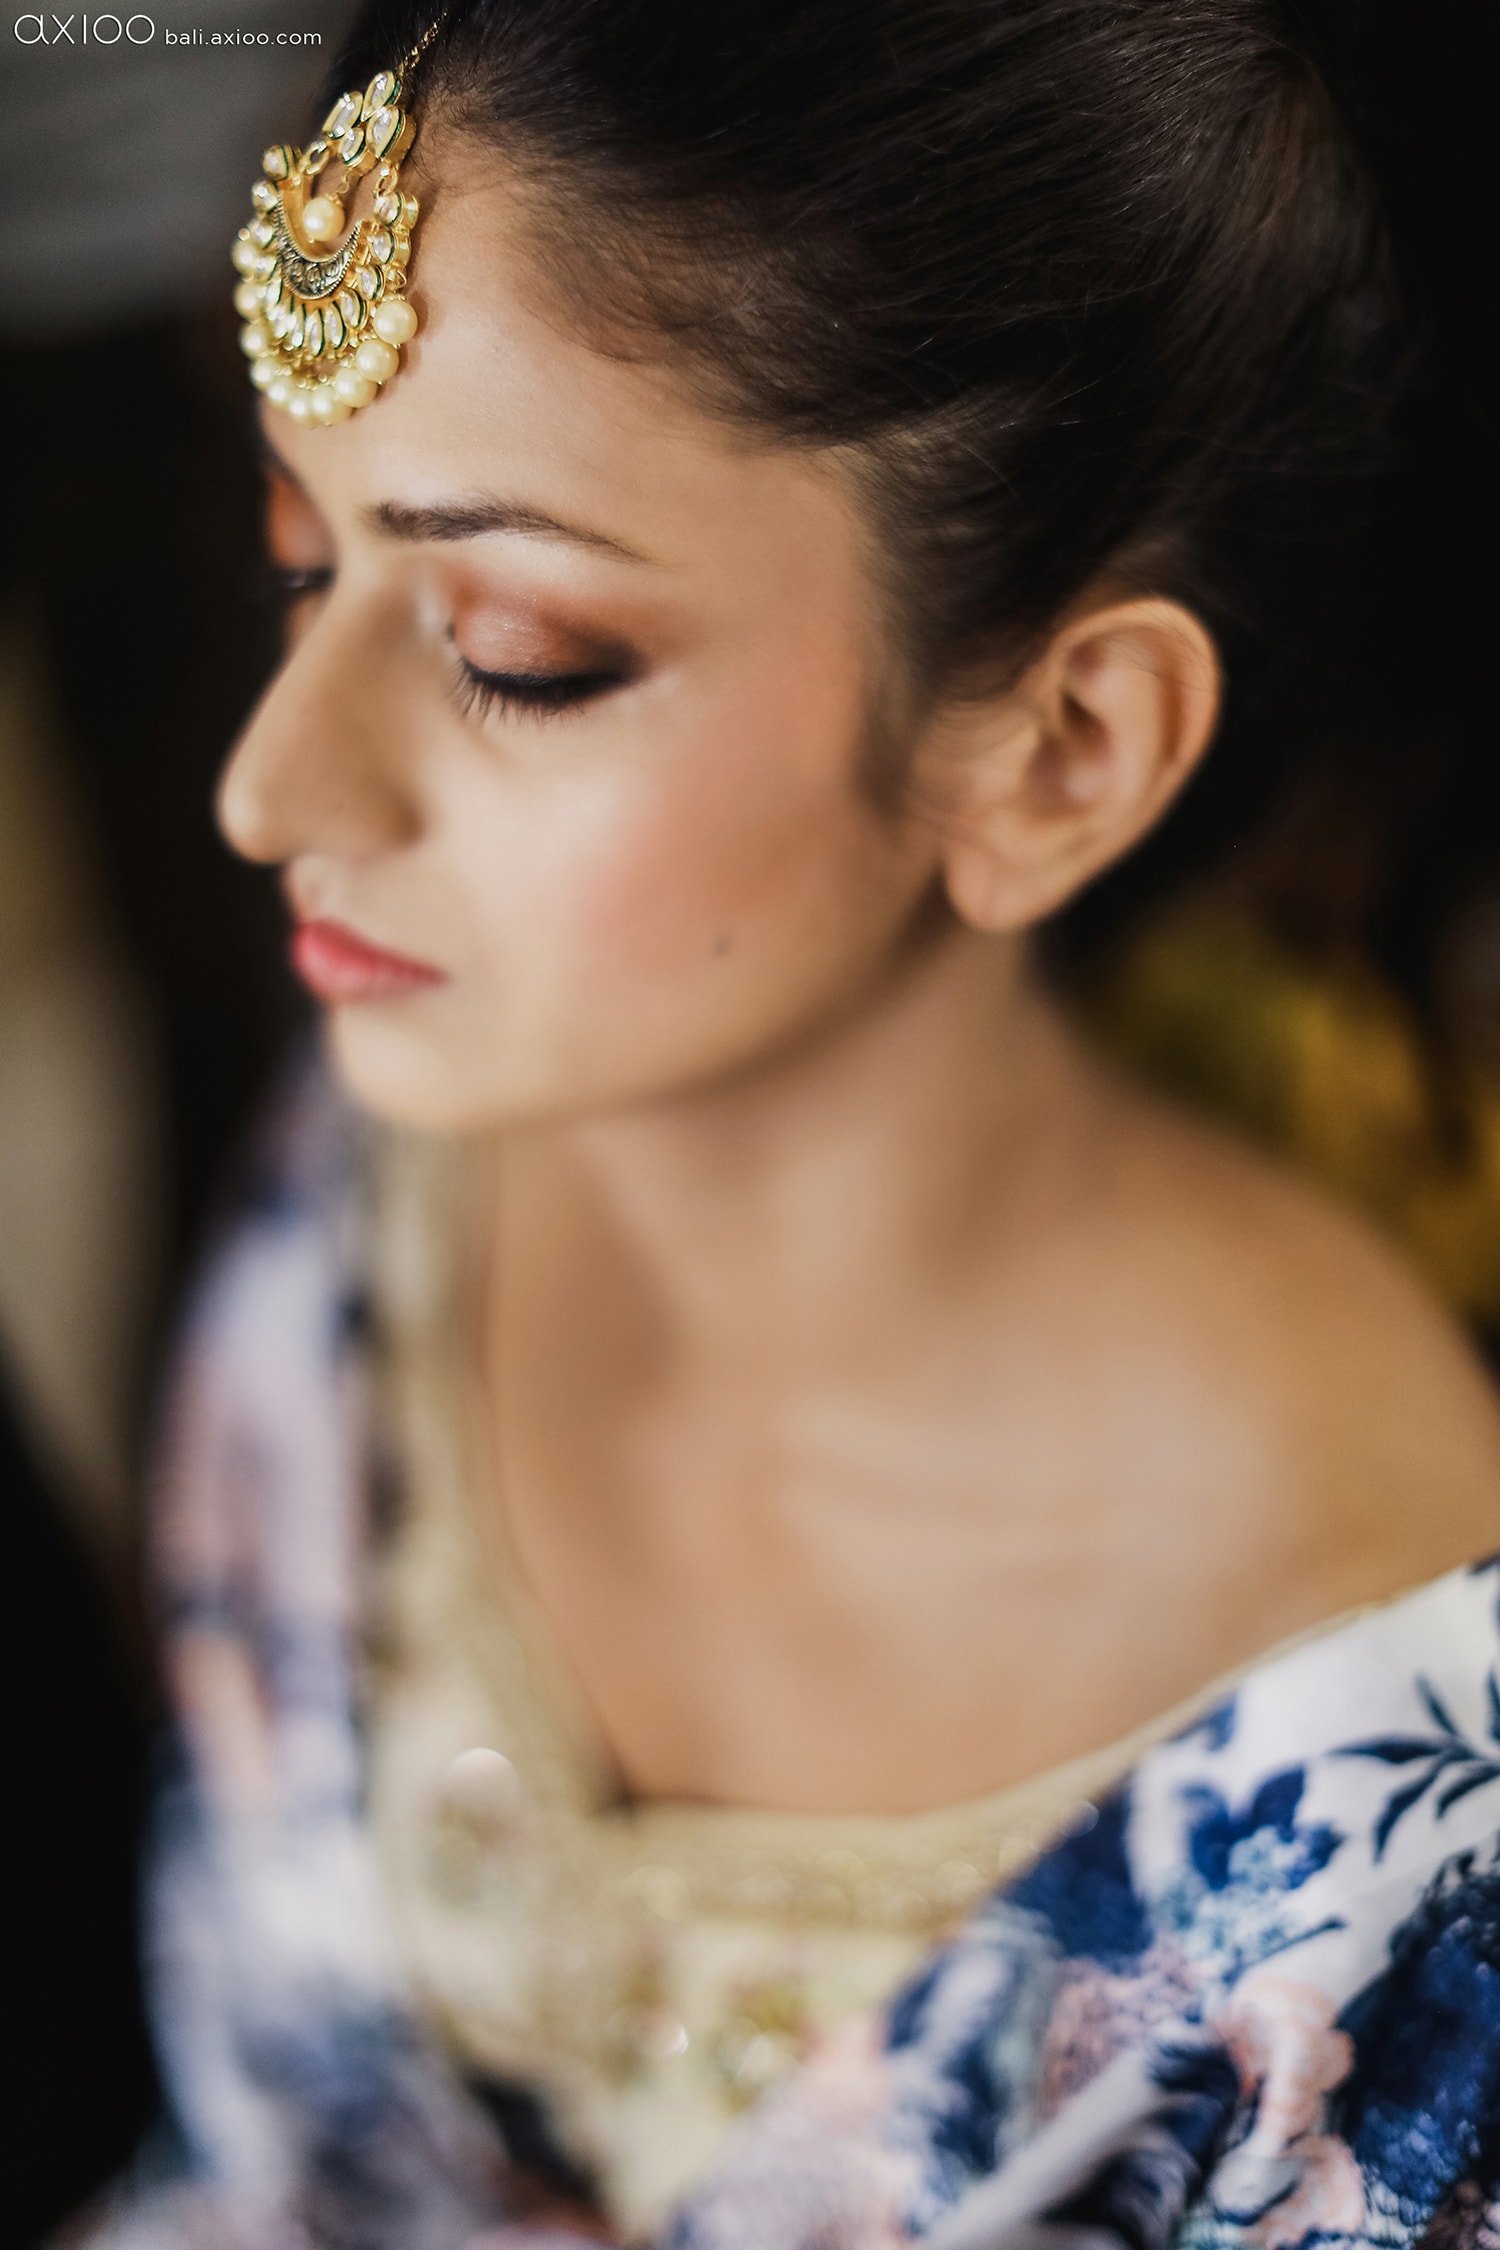 Axioo: Not Your Ordinary Indian Wedding